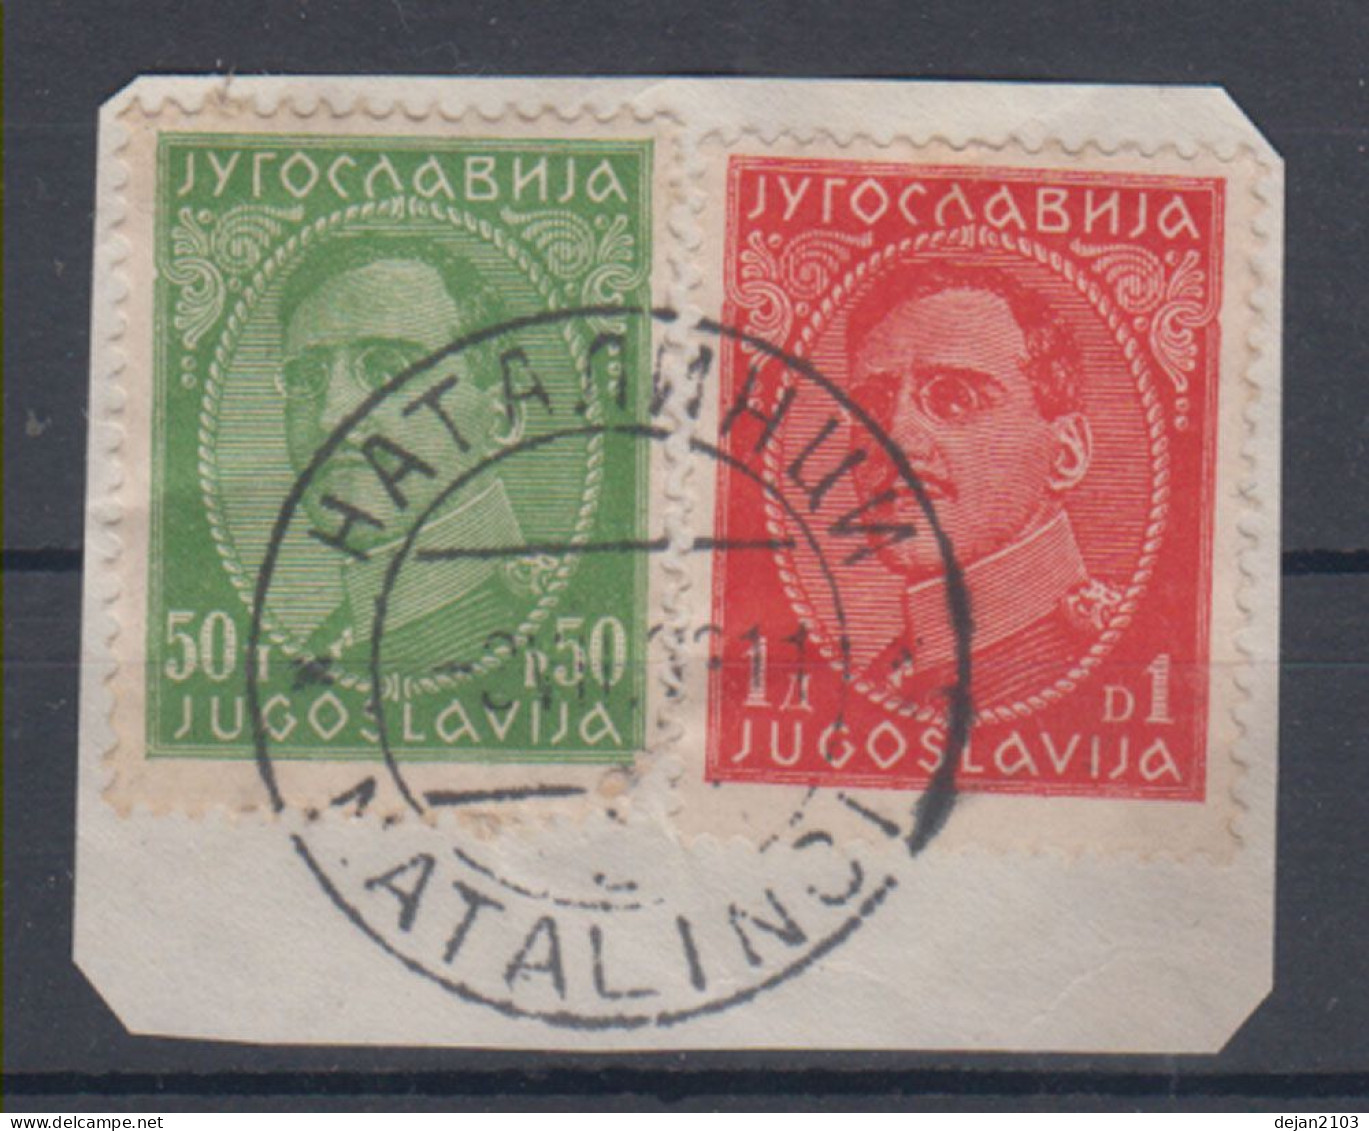 Yugoslavia Kingdom Porto King Aleksandar 1932 USED - Usati